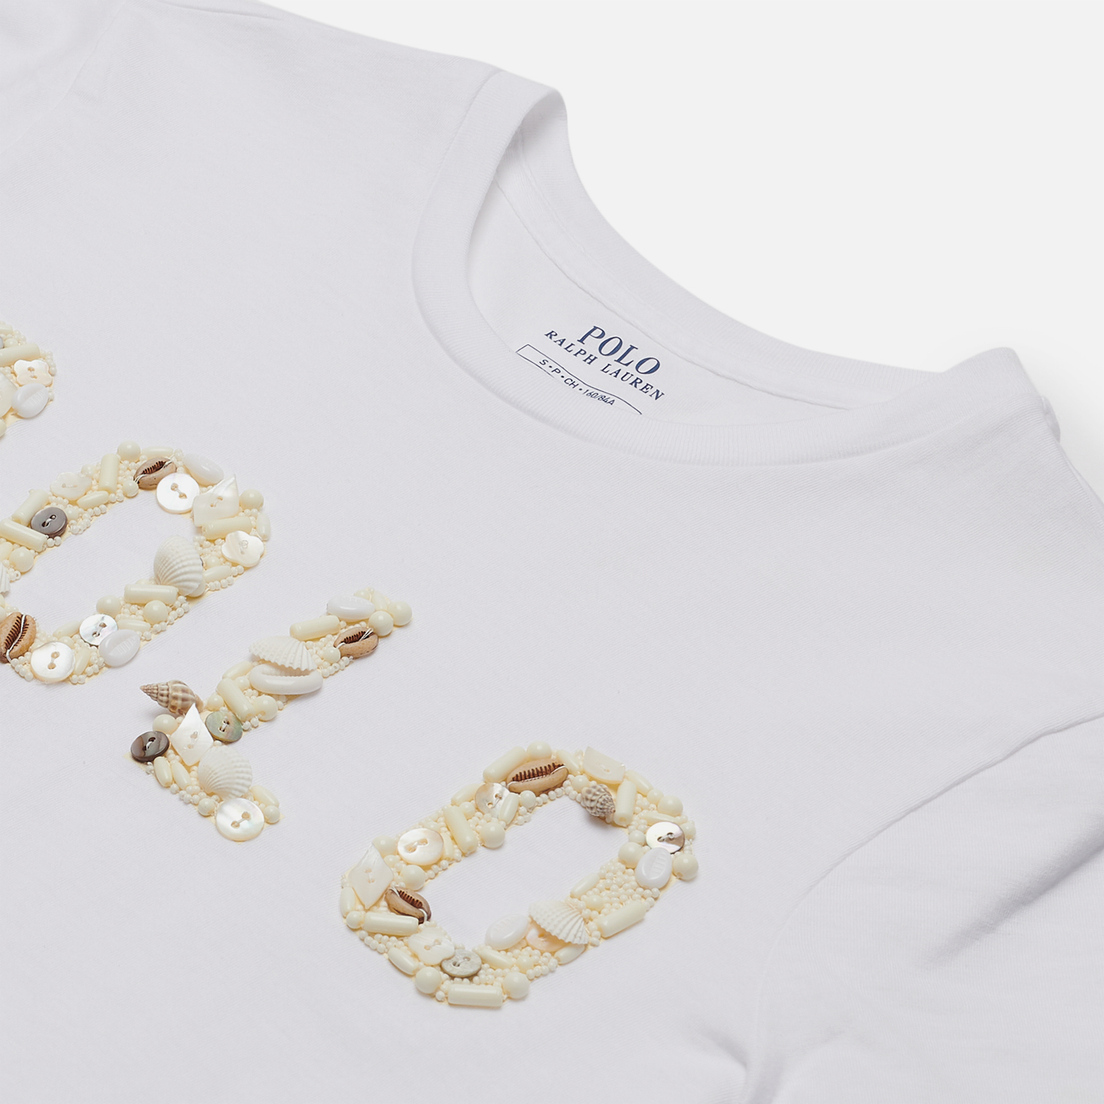 Polo Ralph Lauren Женская футболка Seashell Logo